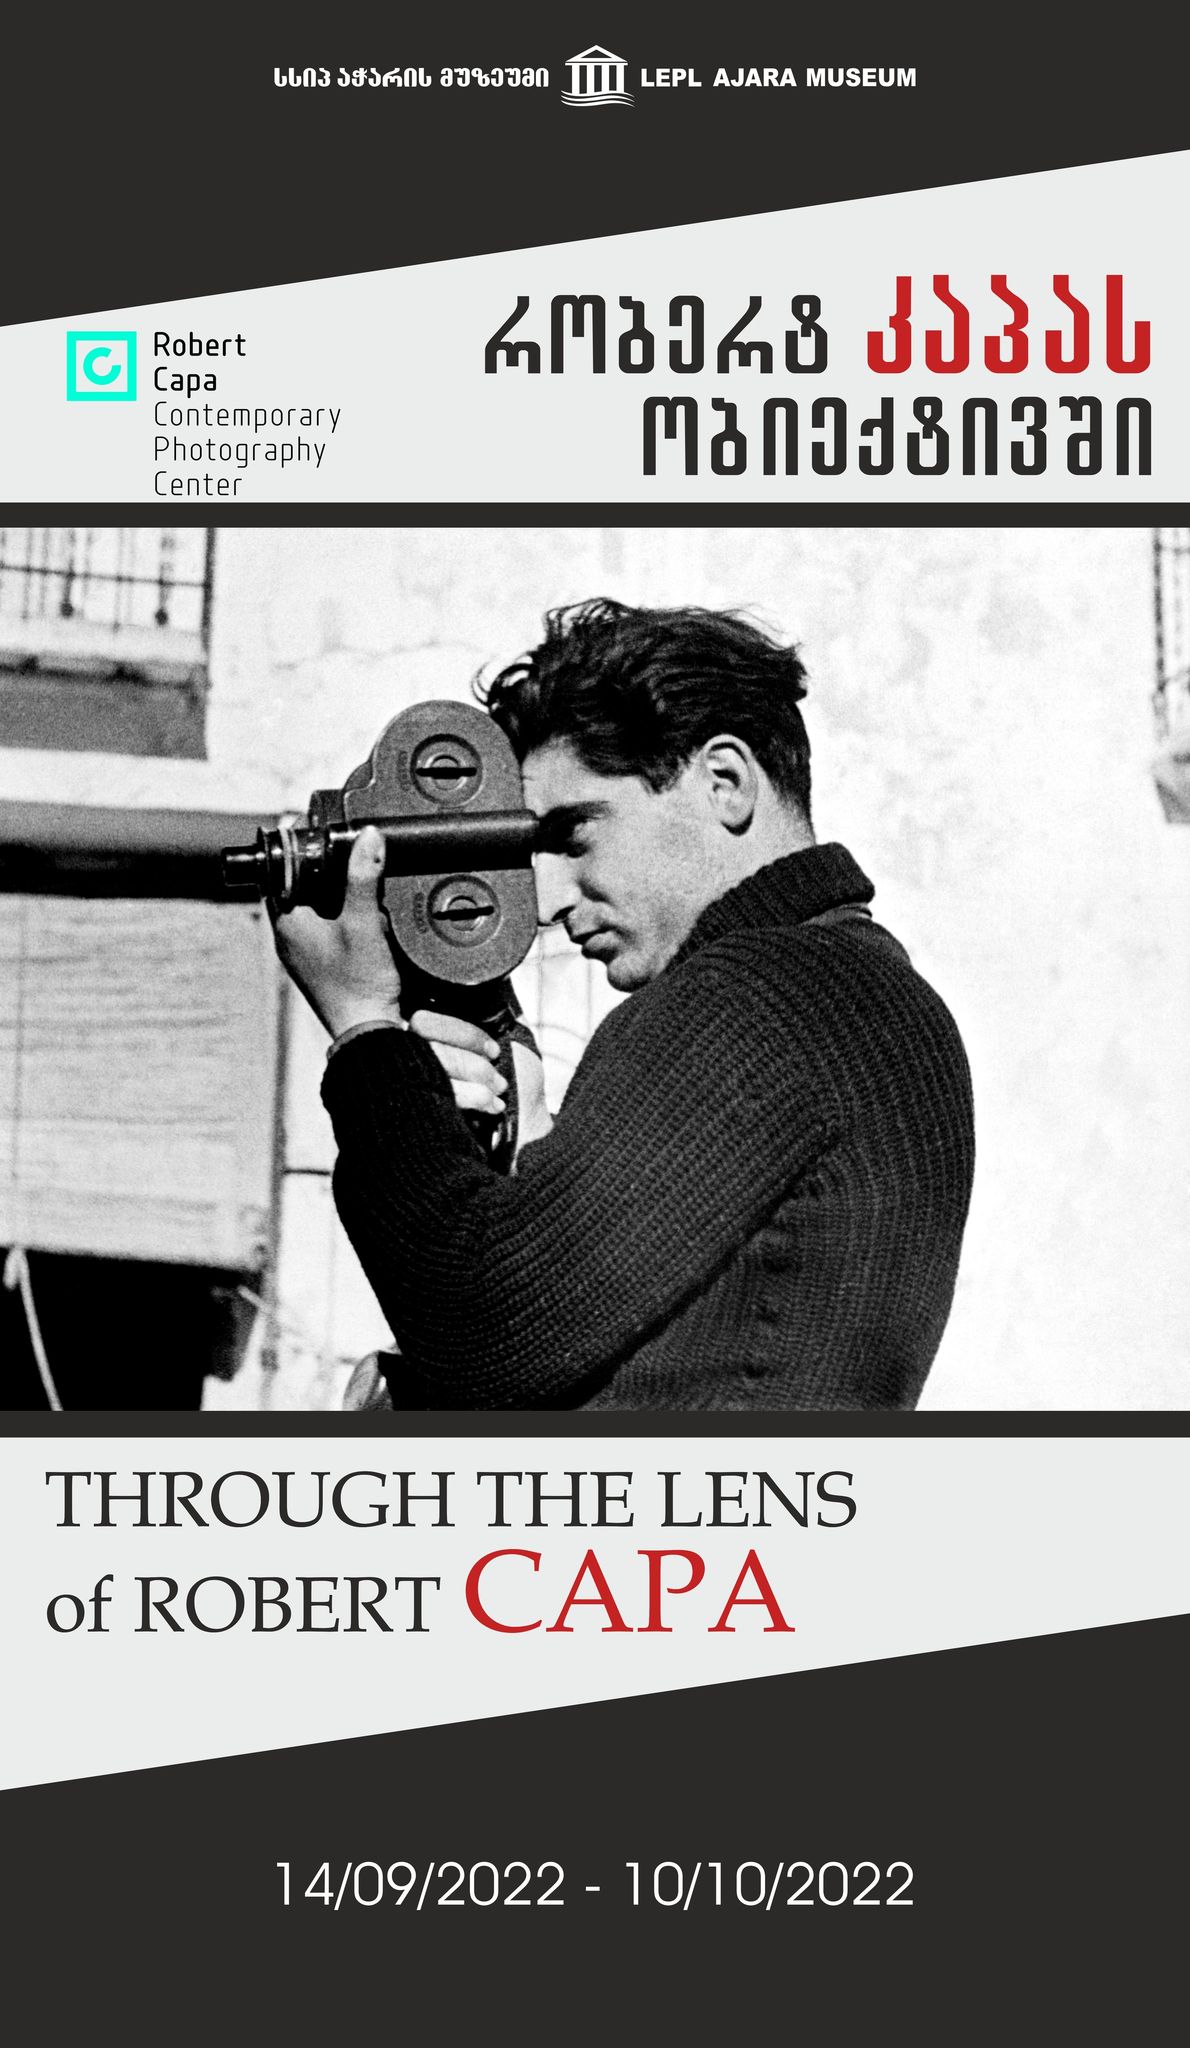 "through the lens of Robert Capa"